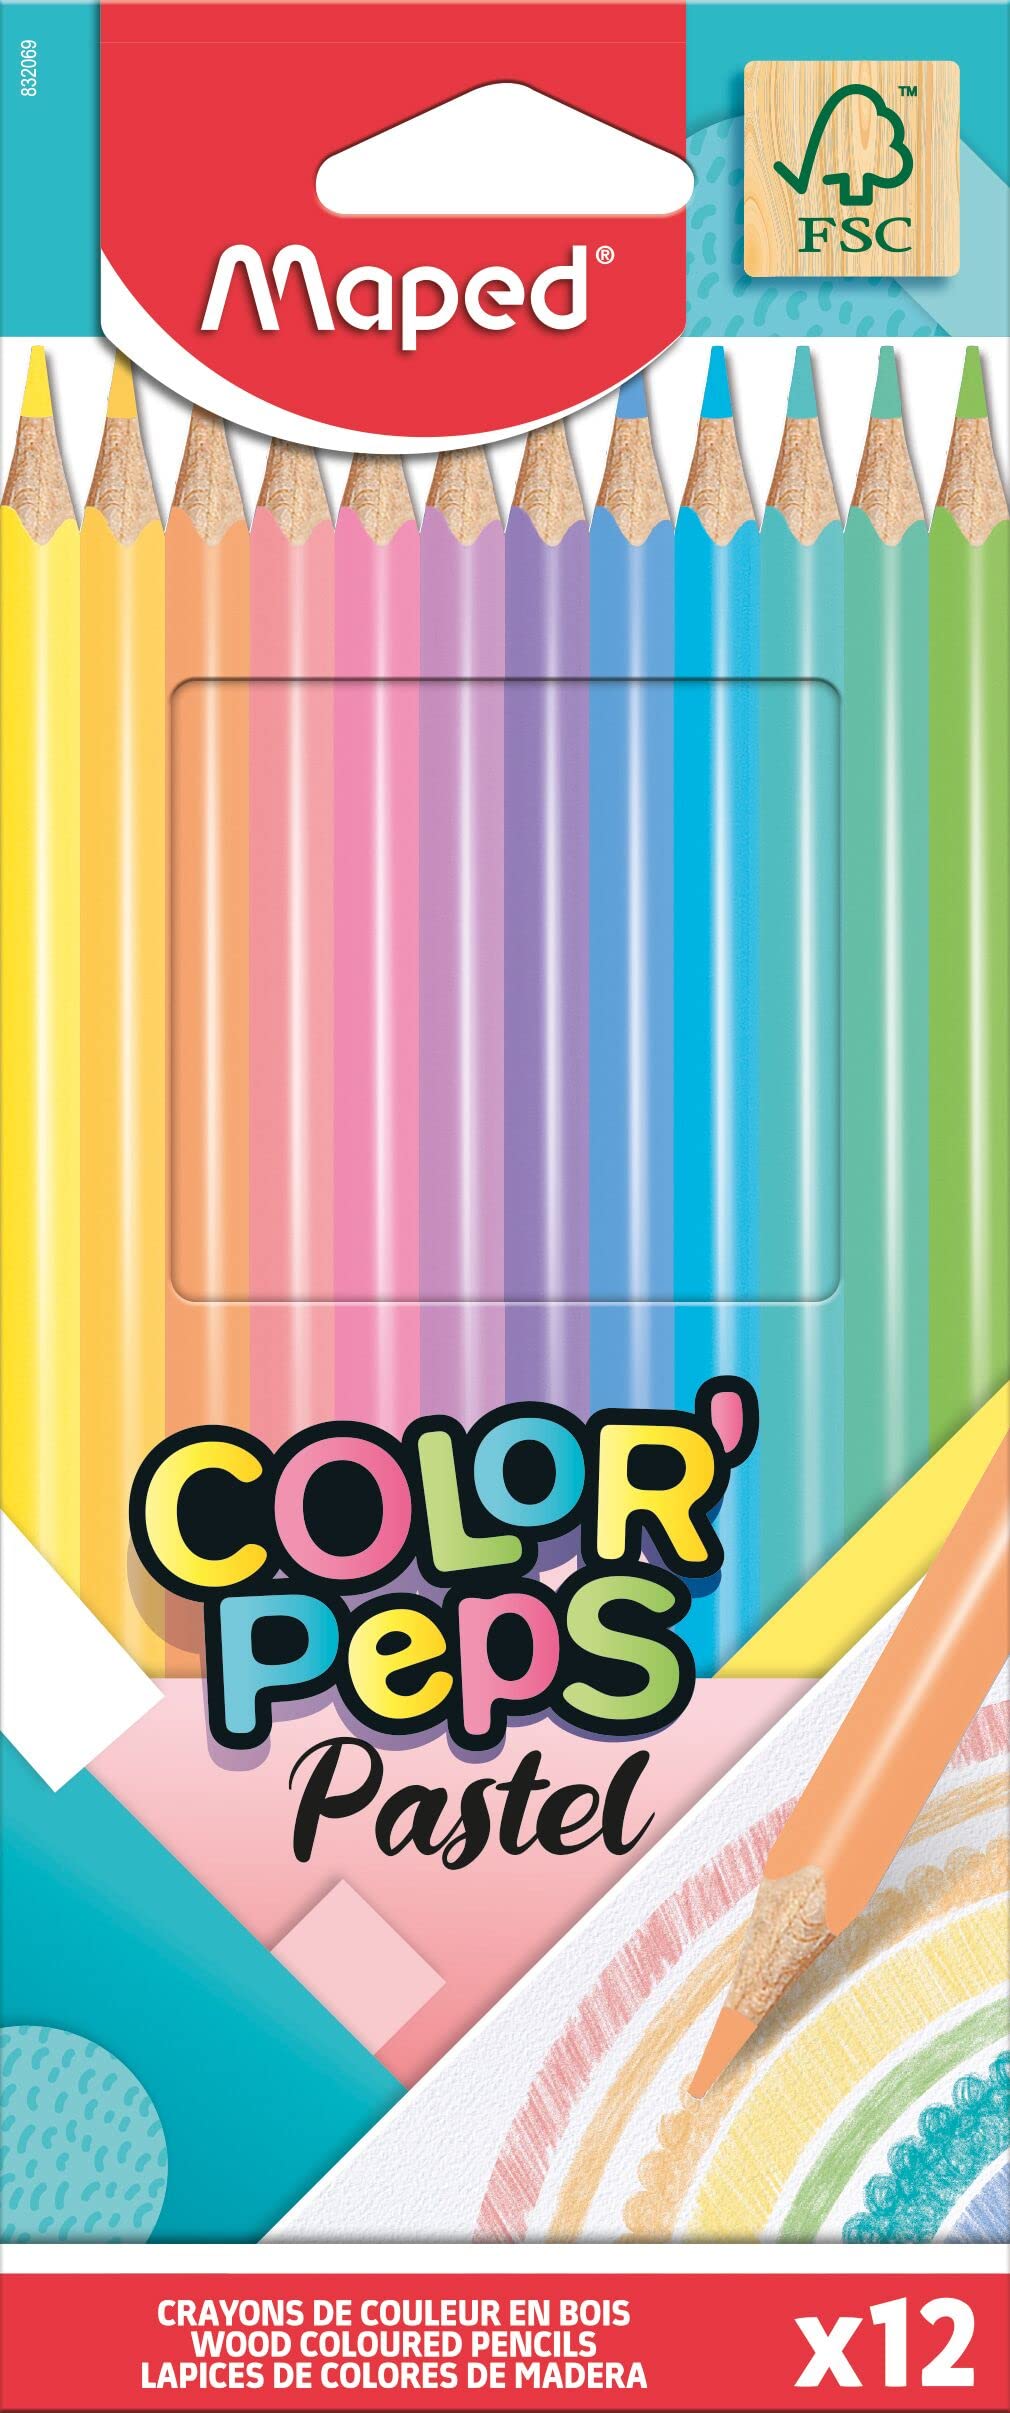 Maped Color'Peps Pastel Color Pencils Set - Pack of 12 مابد مجموعة اقلام تلوين باستيل من كولور بيبس - عبوة من 12 قطعة